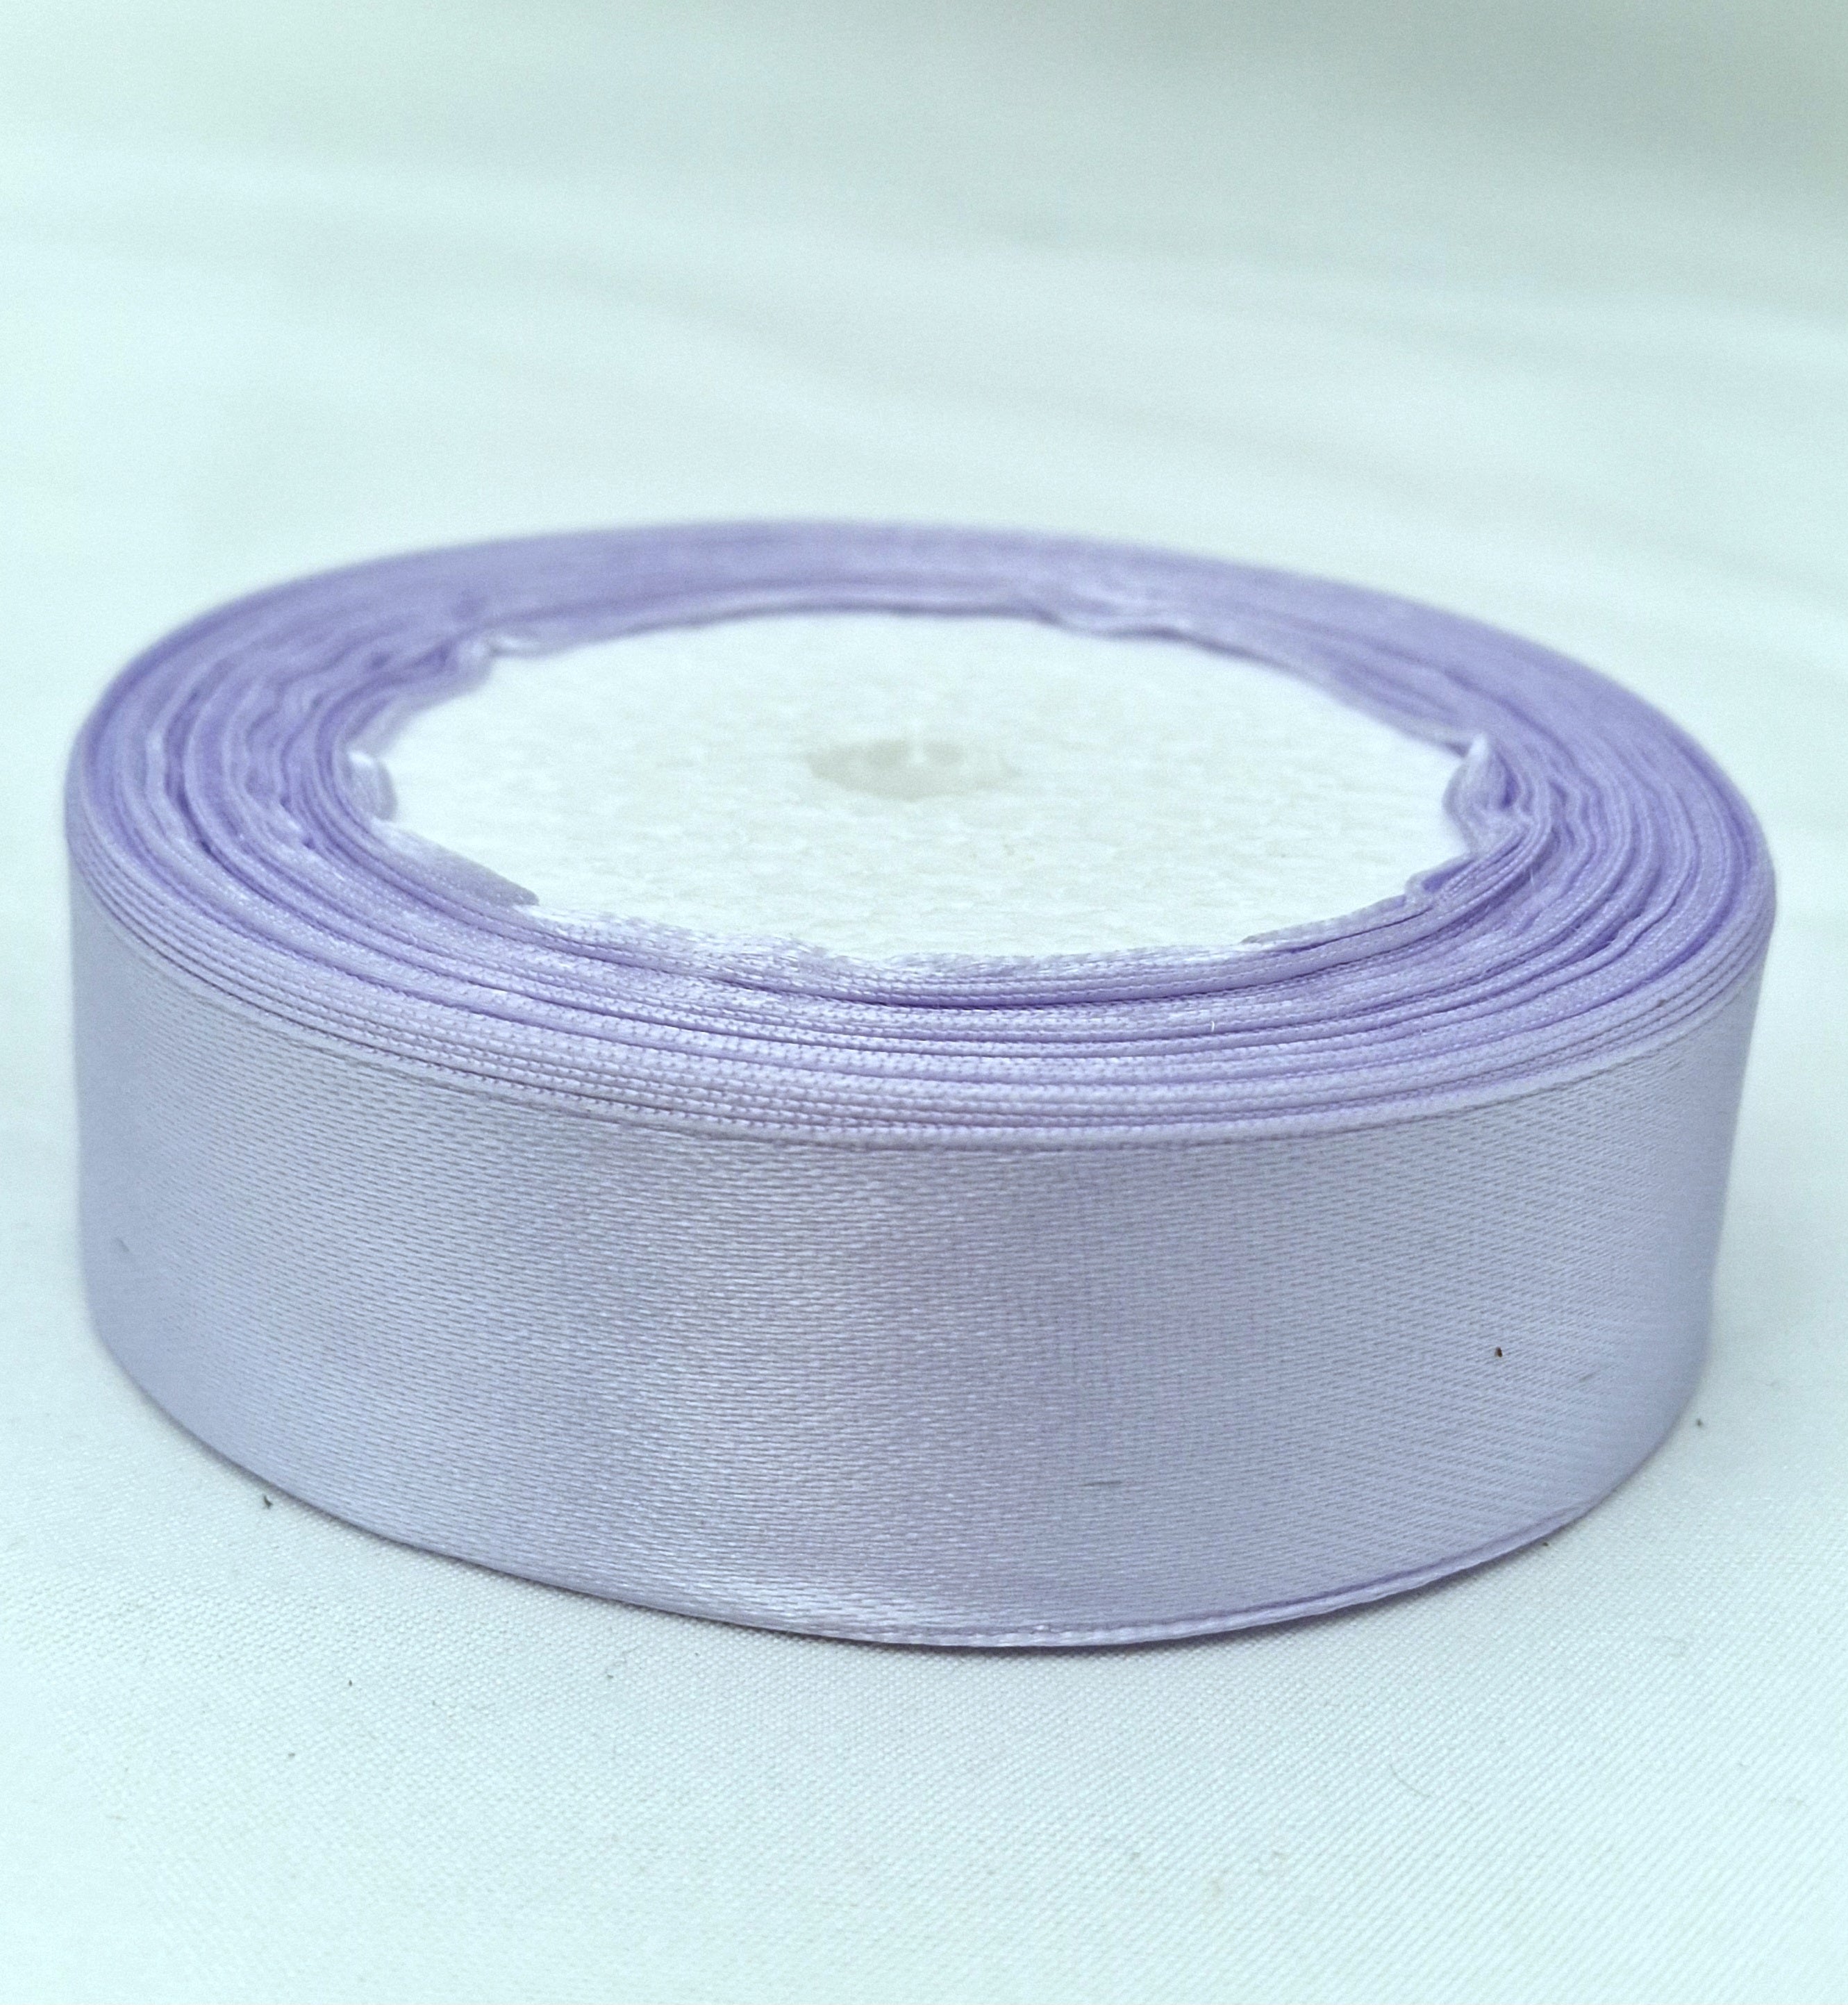 MajorCrafts 25mm 22metres Wisteria Purple Single Sided Satin Fabric Ribbon Roll